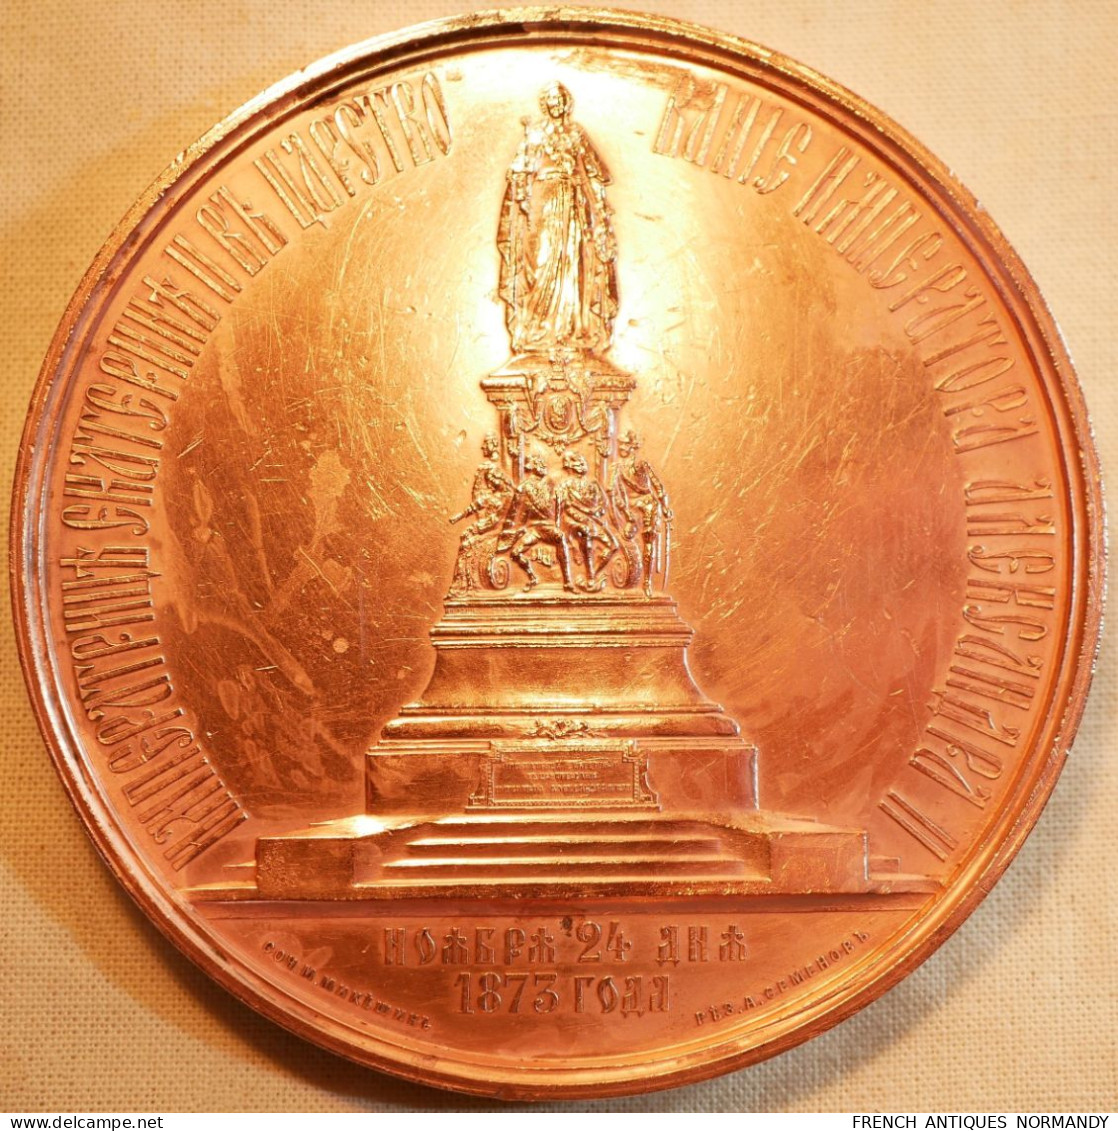 Russie Impériale - médaille 1873 inauguration monument de Catherine II M. Mikeshin A. Semenov ref BX24RUS01